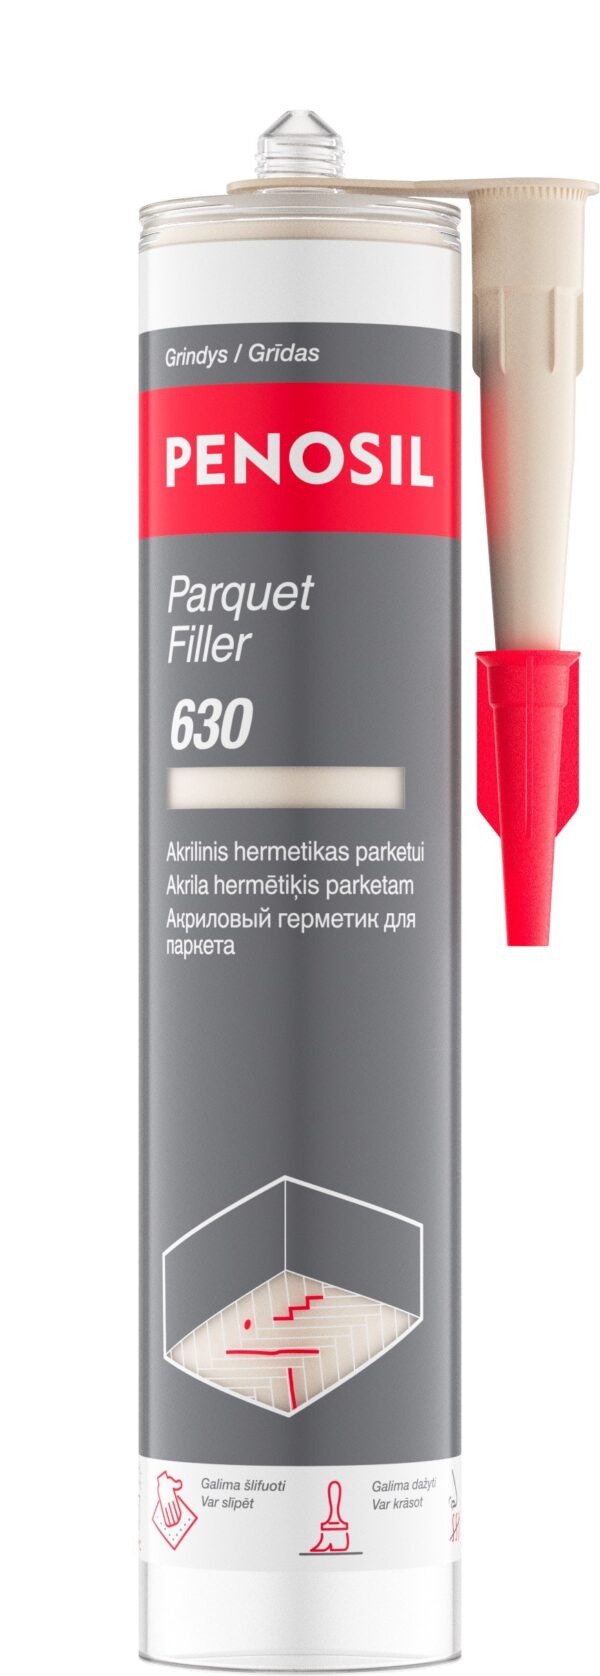 Penosil Parquet Filler 630 PF86 akrilinis hermetikas parketui